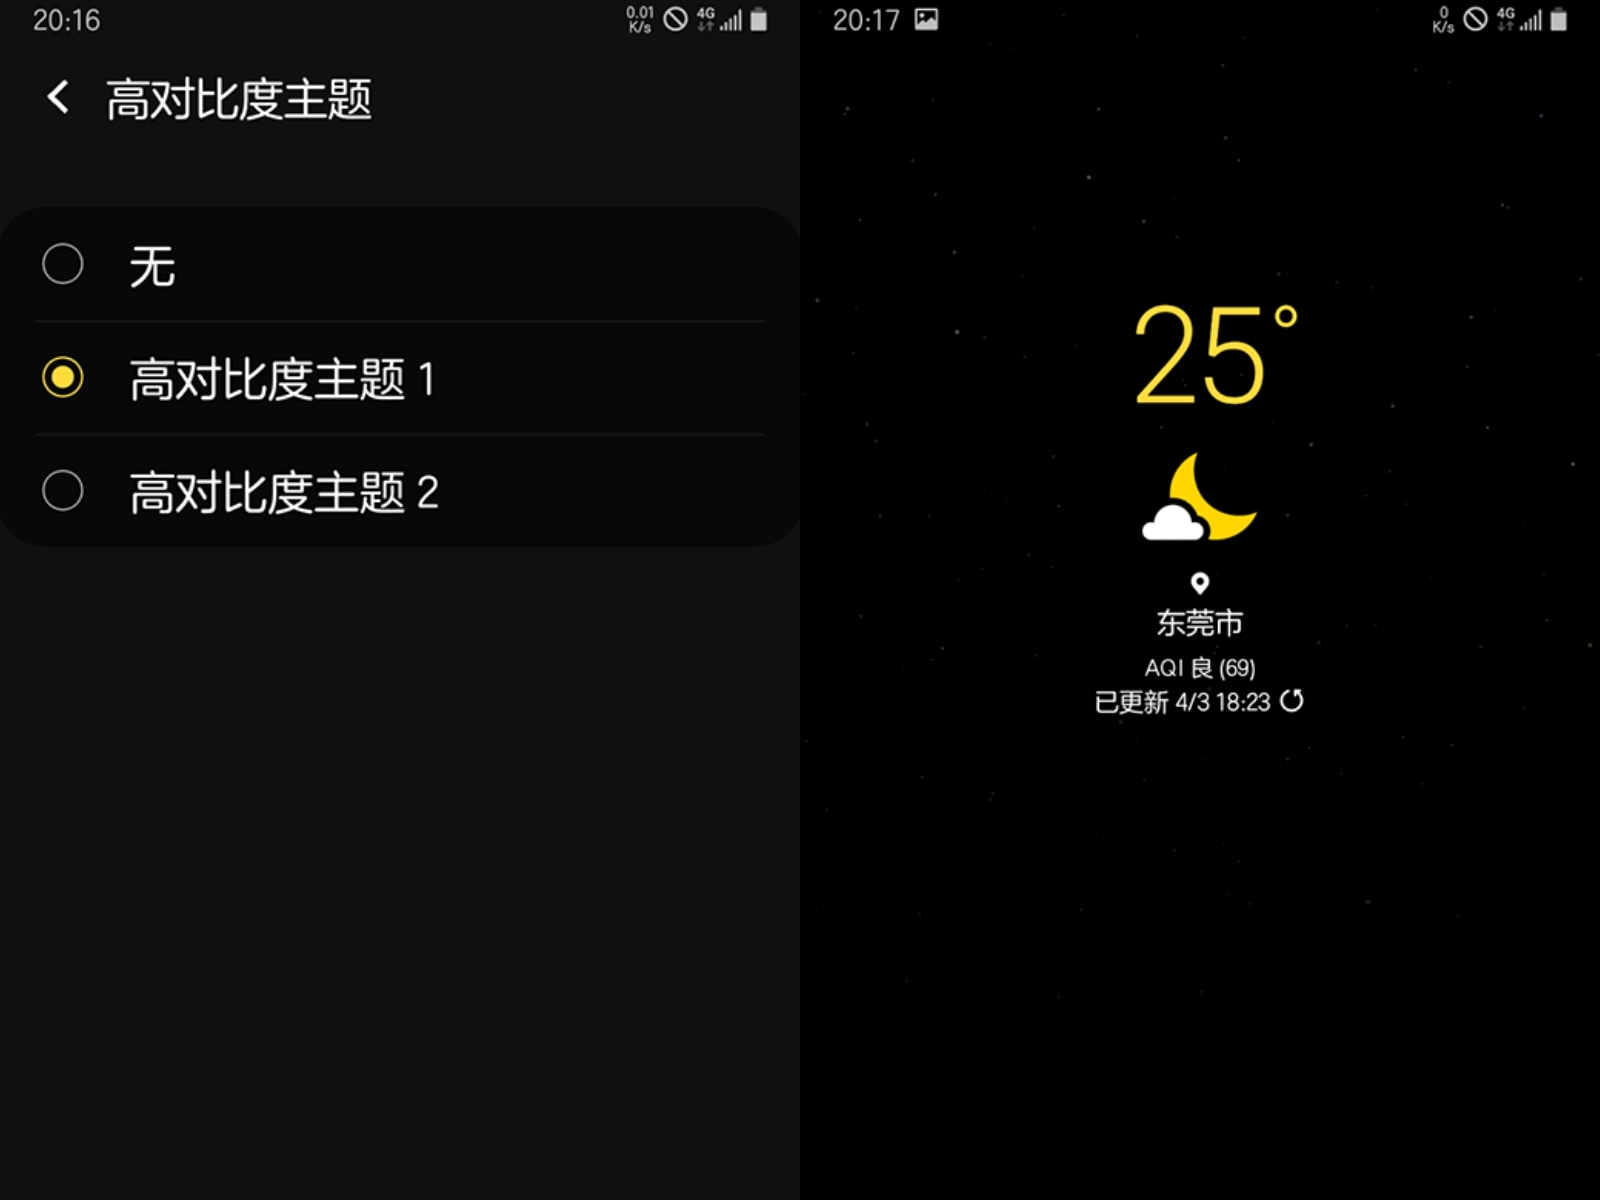 三星系列陆续更新Android9.0 把手中这台S8更